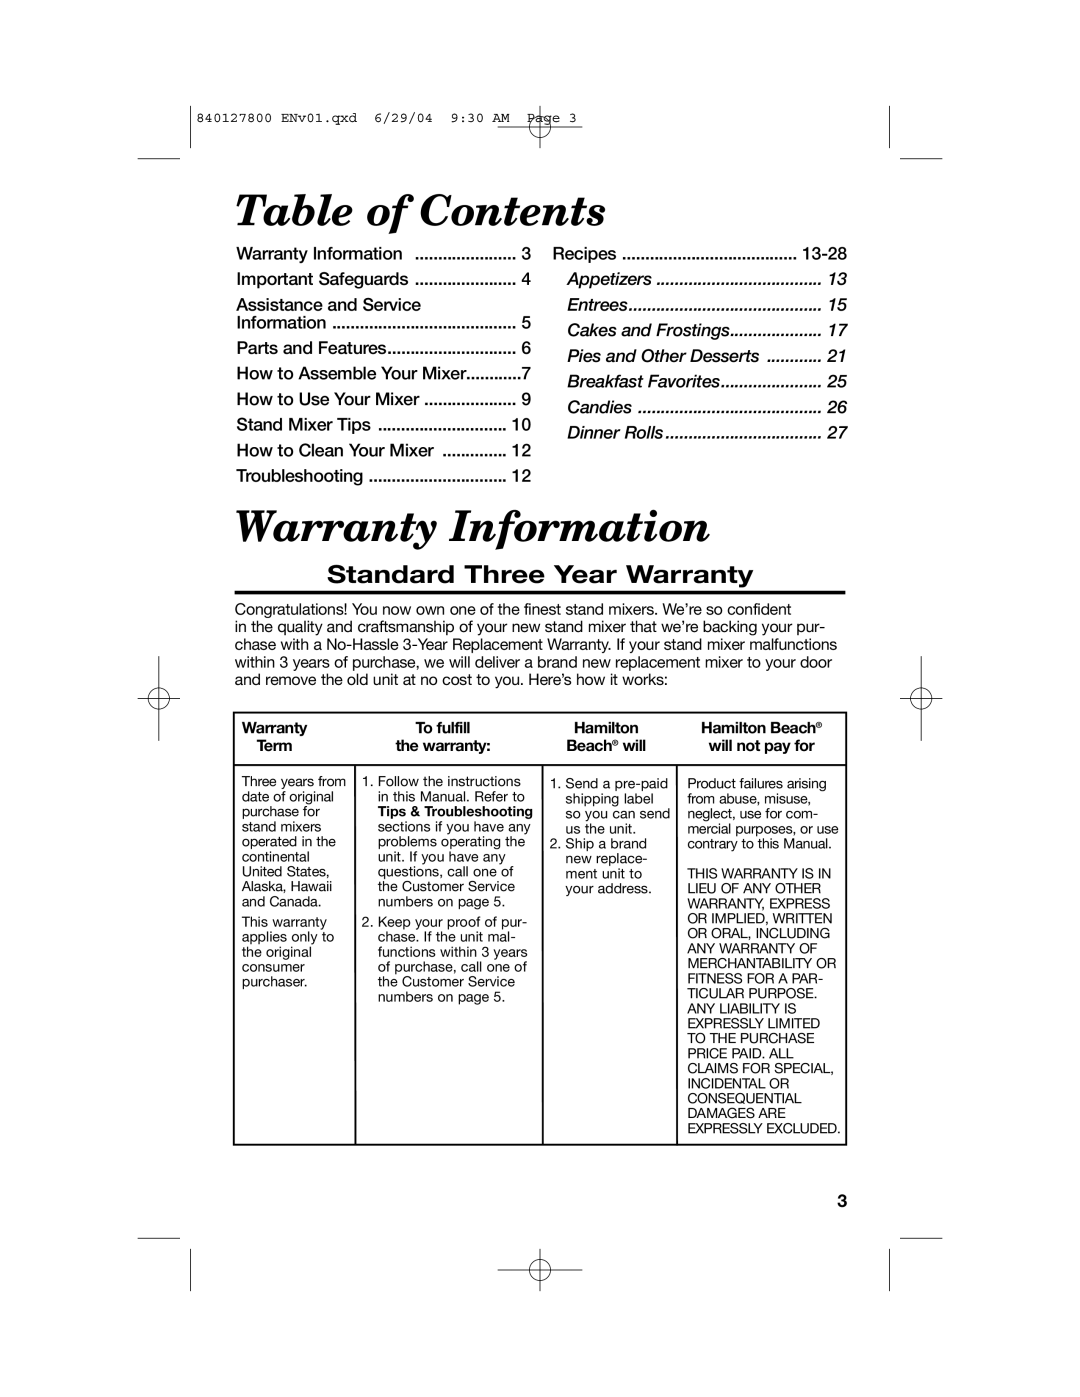 Hamilton Beach 63225 manual Table of Contents, Warranty Information, Standard Three Year Warranty 